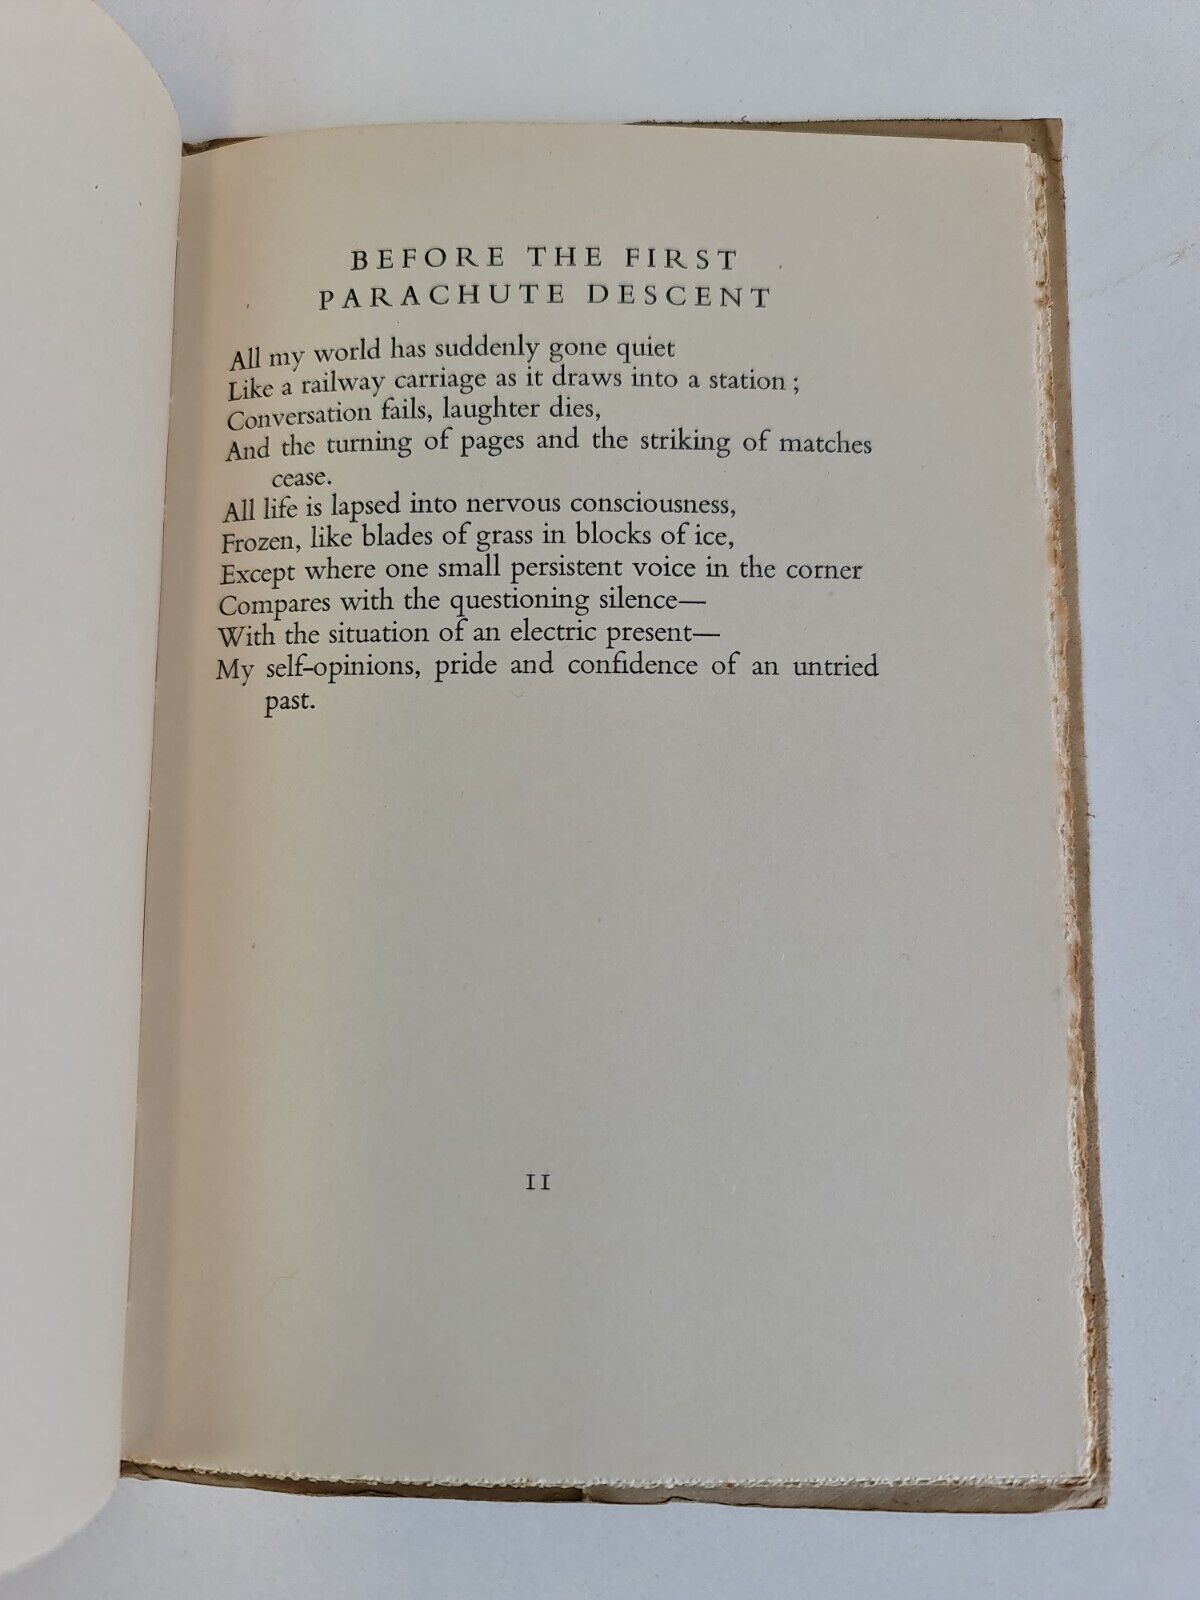 Parachute Battalion. Poems by Richard Spender (1943)